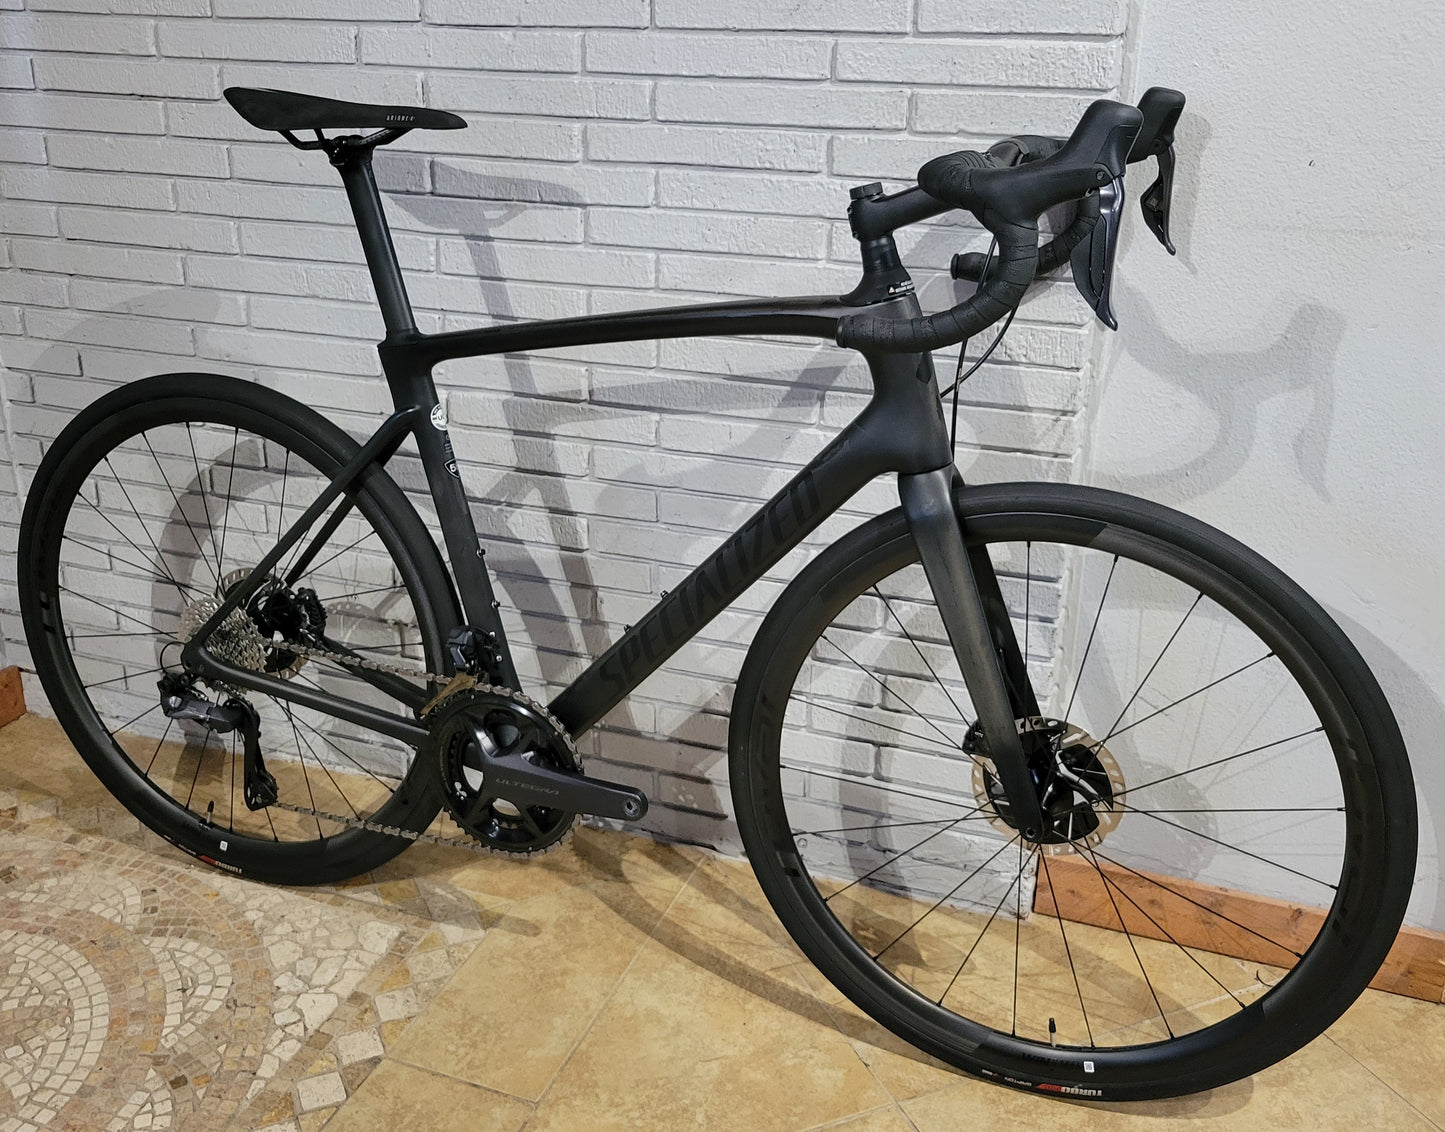 2023 Specialized Roubaix Carbon (58cm) Ultegra Di2 12 speed, Roval CLX